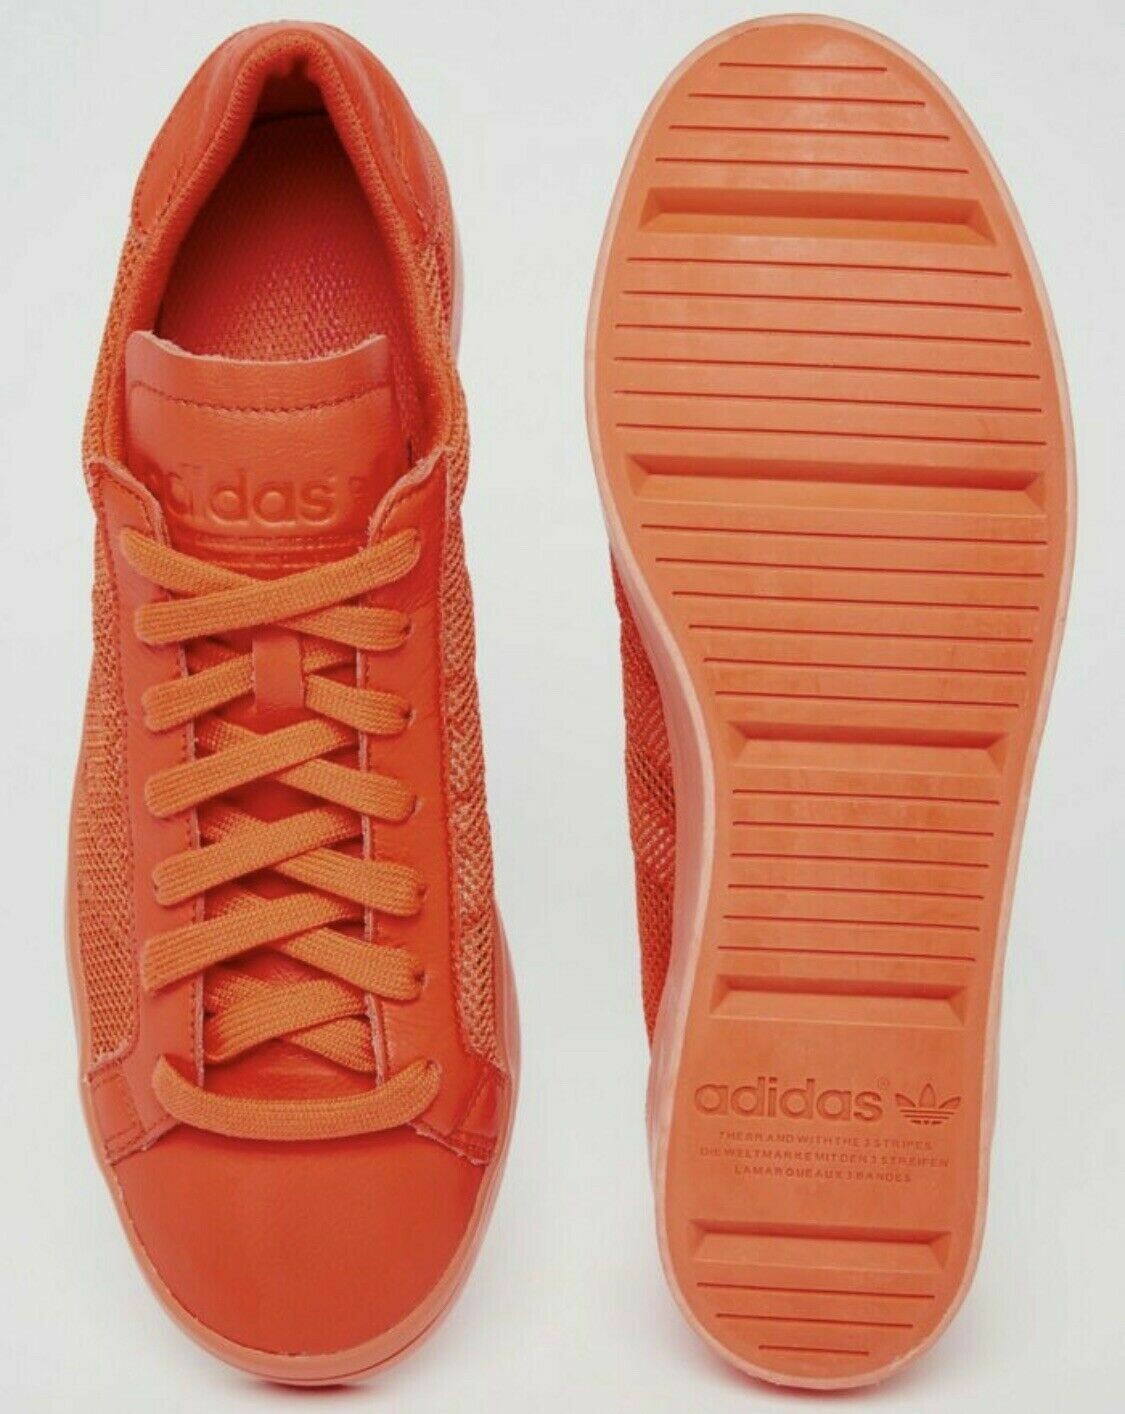 Adidas Originals Power Court - Orange